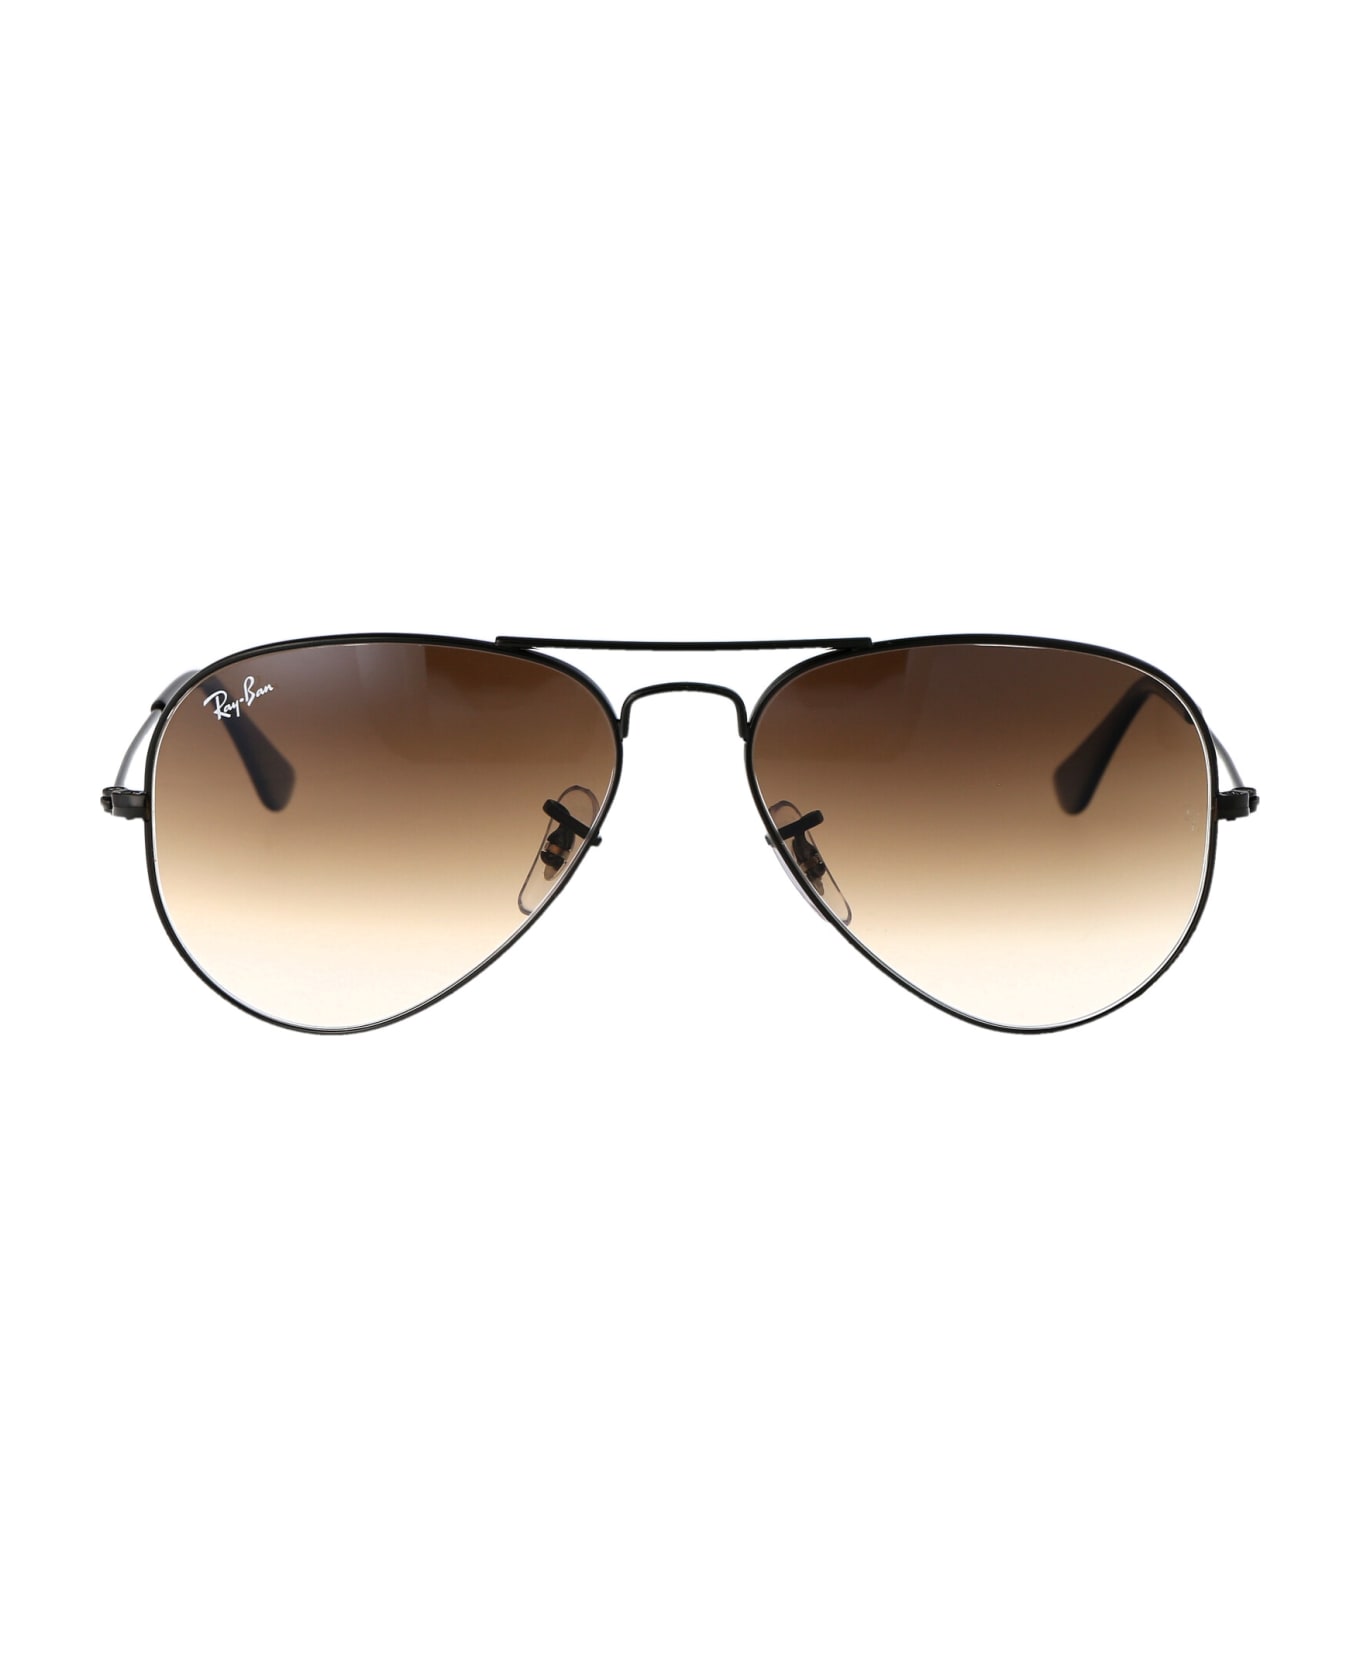 Ray-Ban Aviator Sunglasses - 002/51 Black